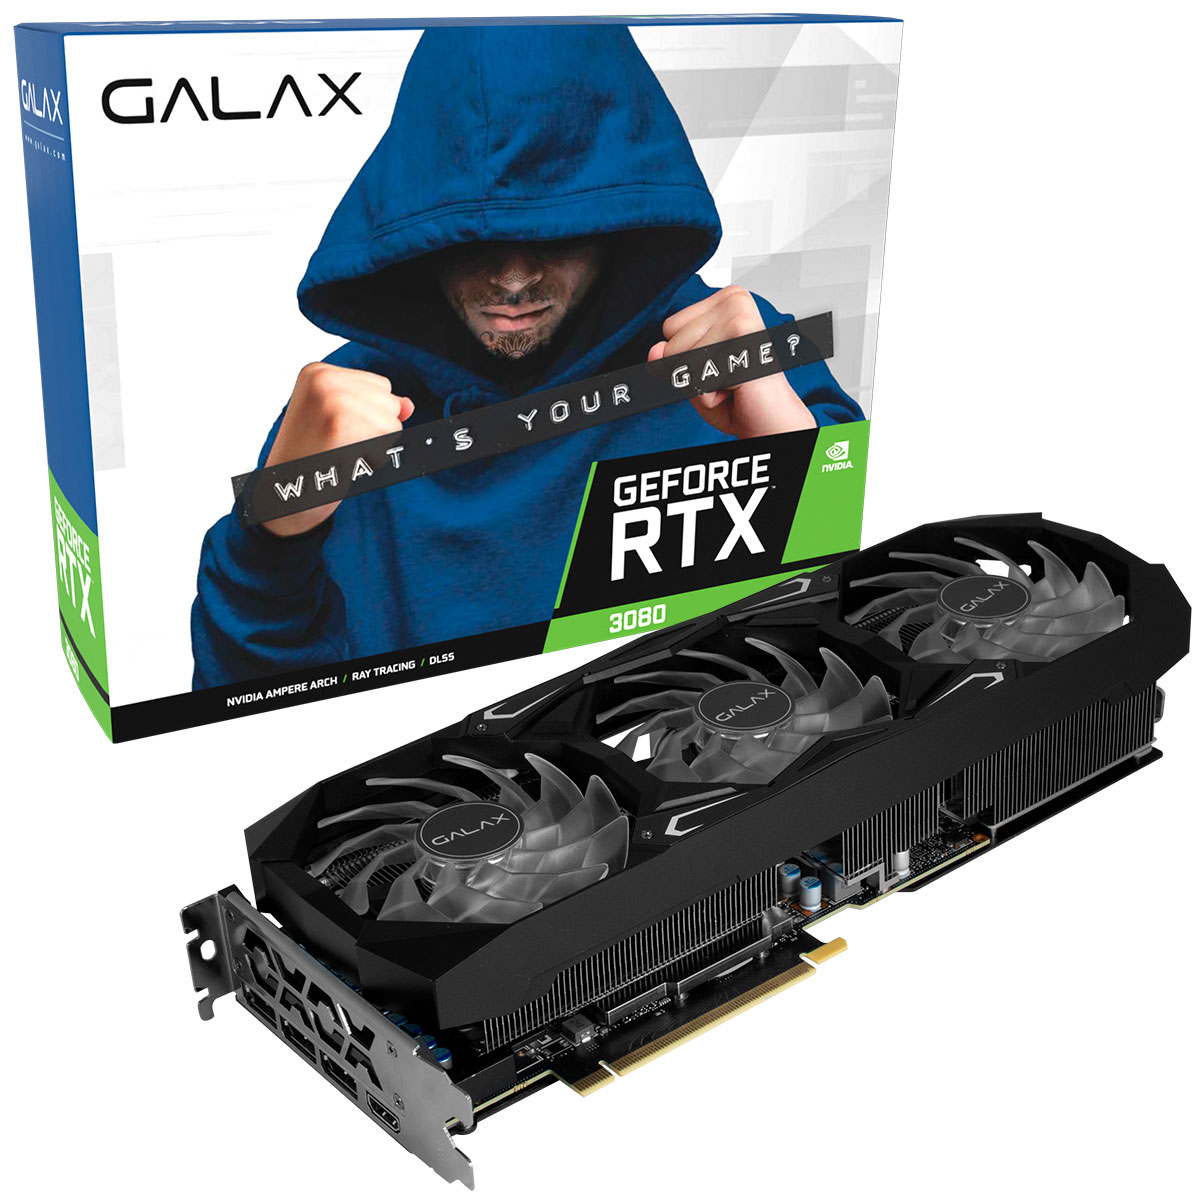 GeForce RTX 3080 12GB GDDR6X 384bits - 1 Click O.C - Galax SG 38NOM5MD99SS - Selo LHR